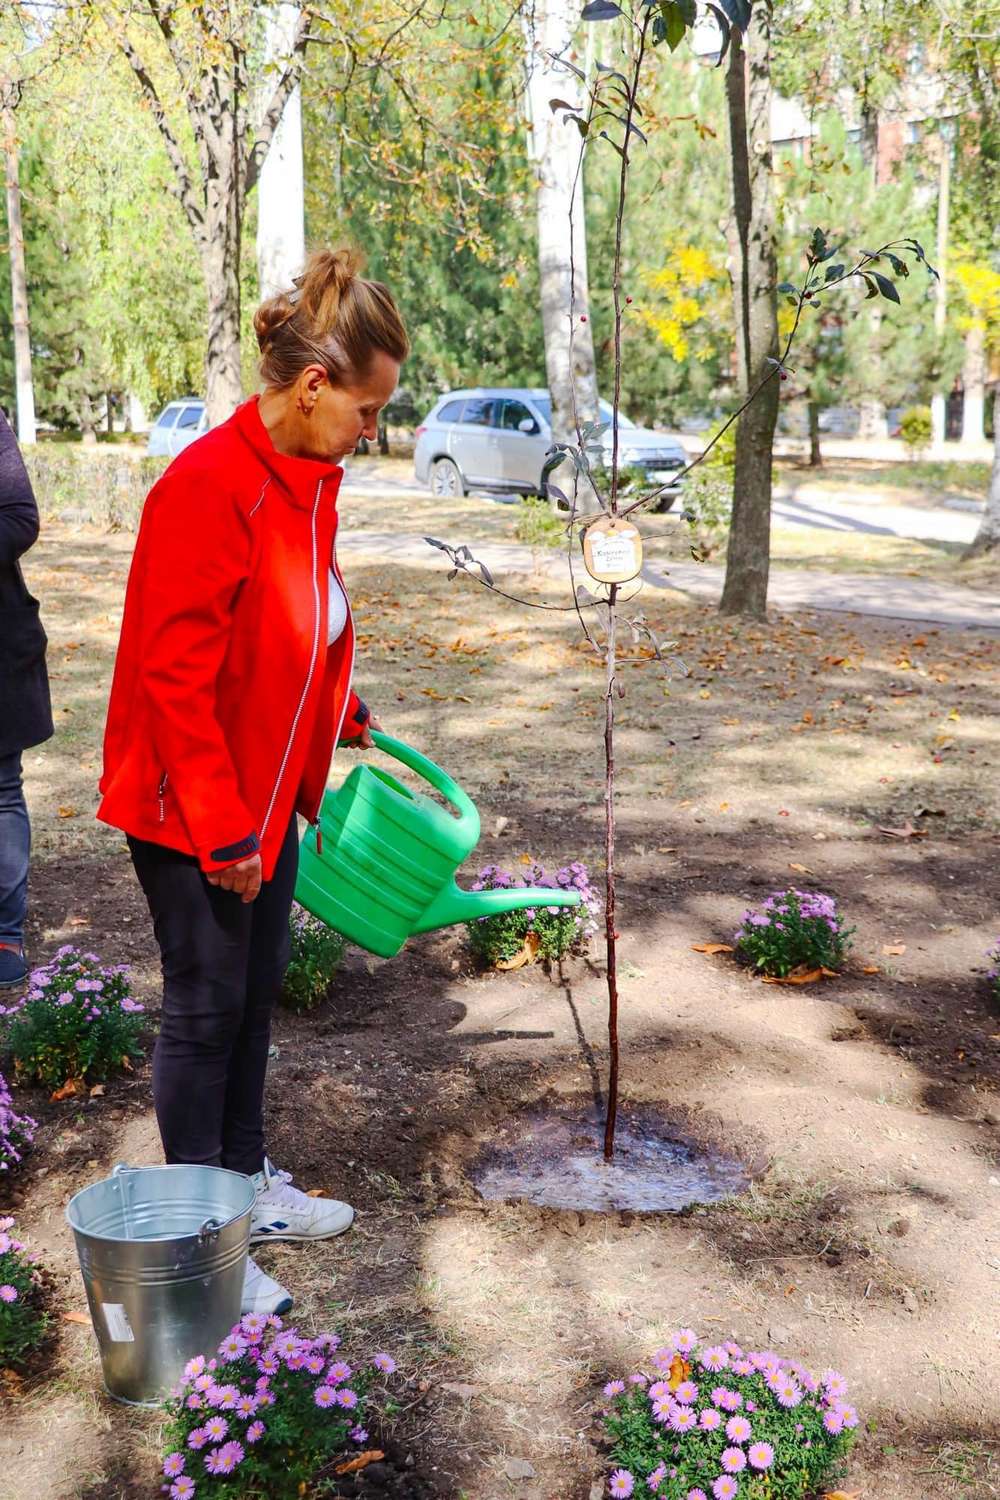 Рідні вбитого росіянами у Зеленодольську хлопчика посадили райську яблуньку в пам’ять про нього